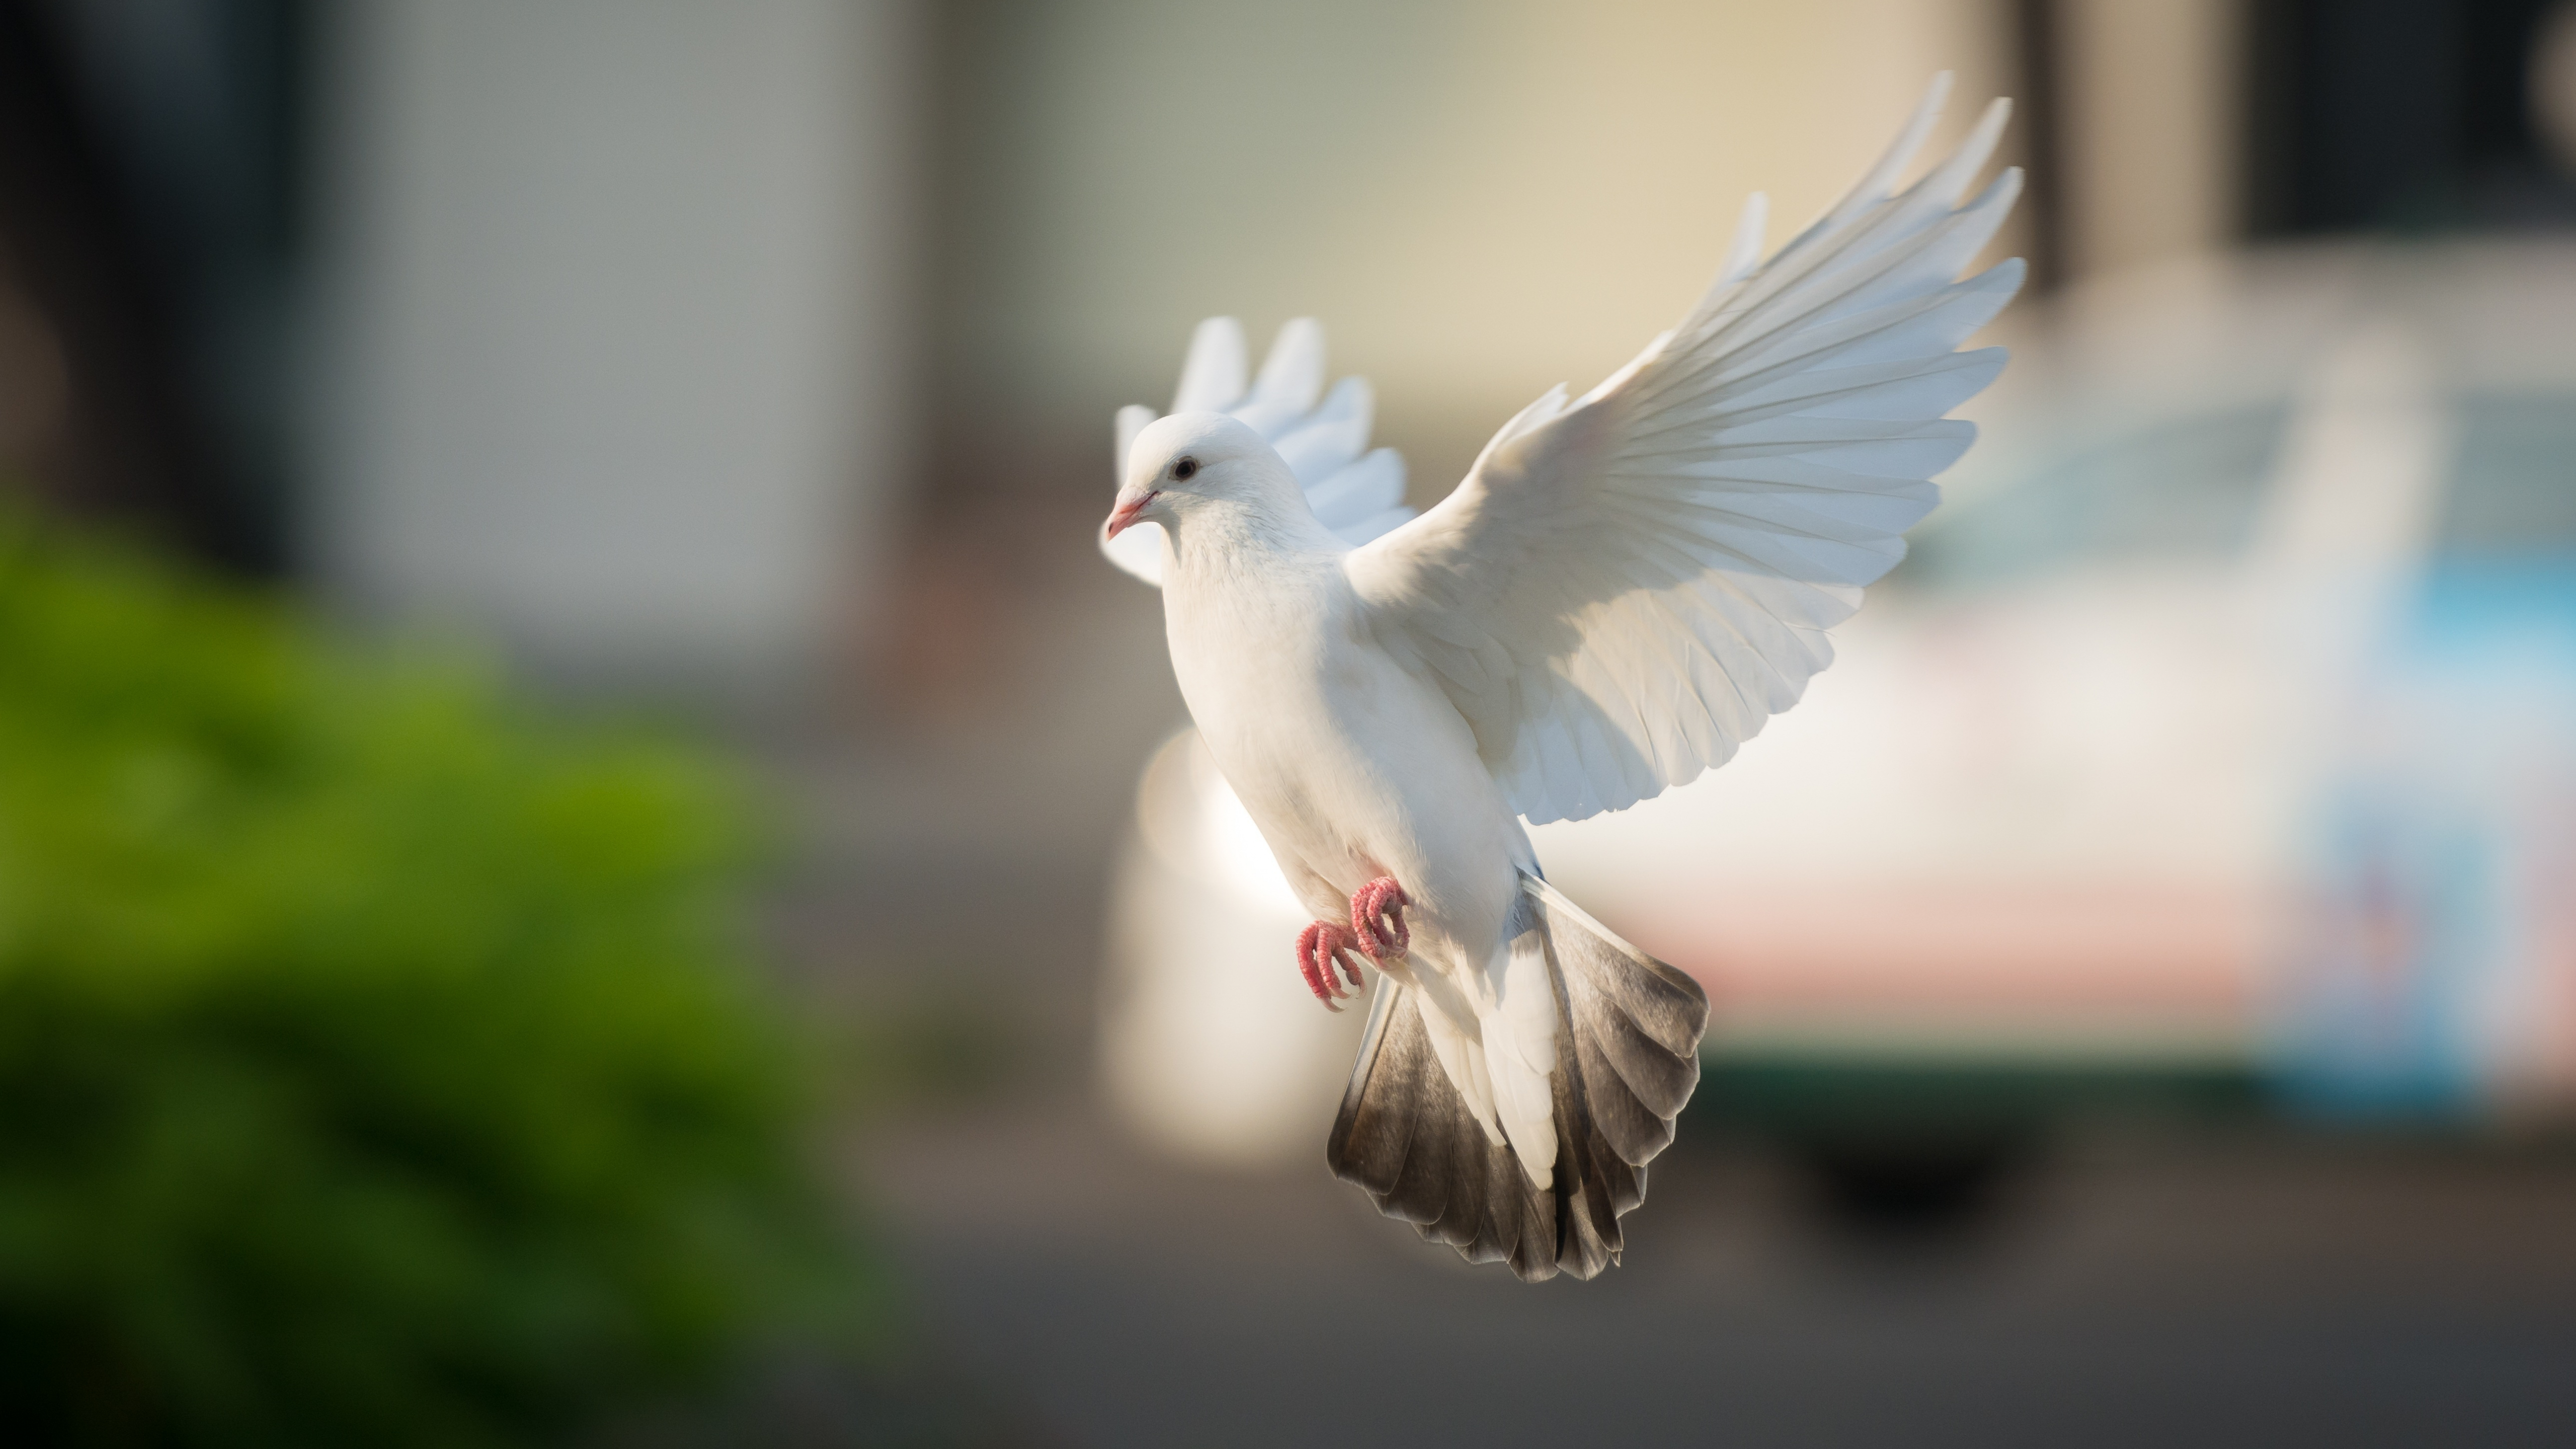 White dove, bird, flight, 5120x2880 wallpaper.